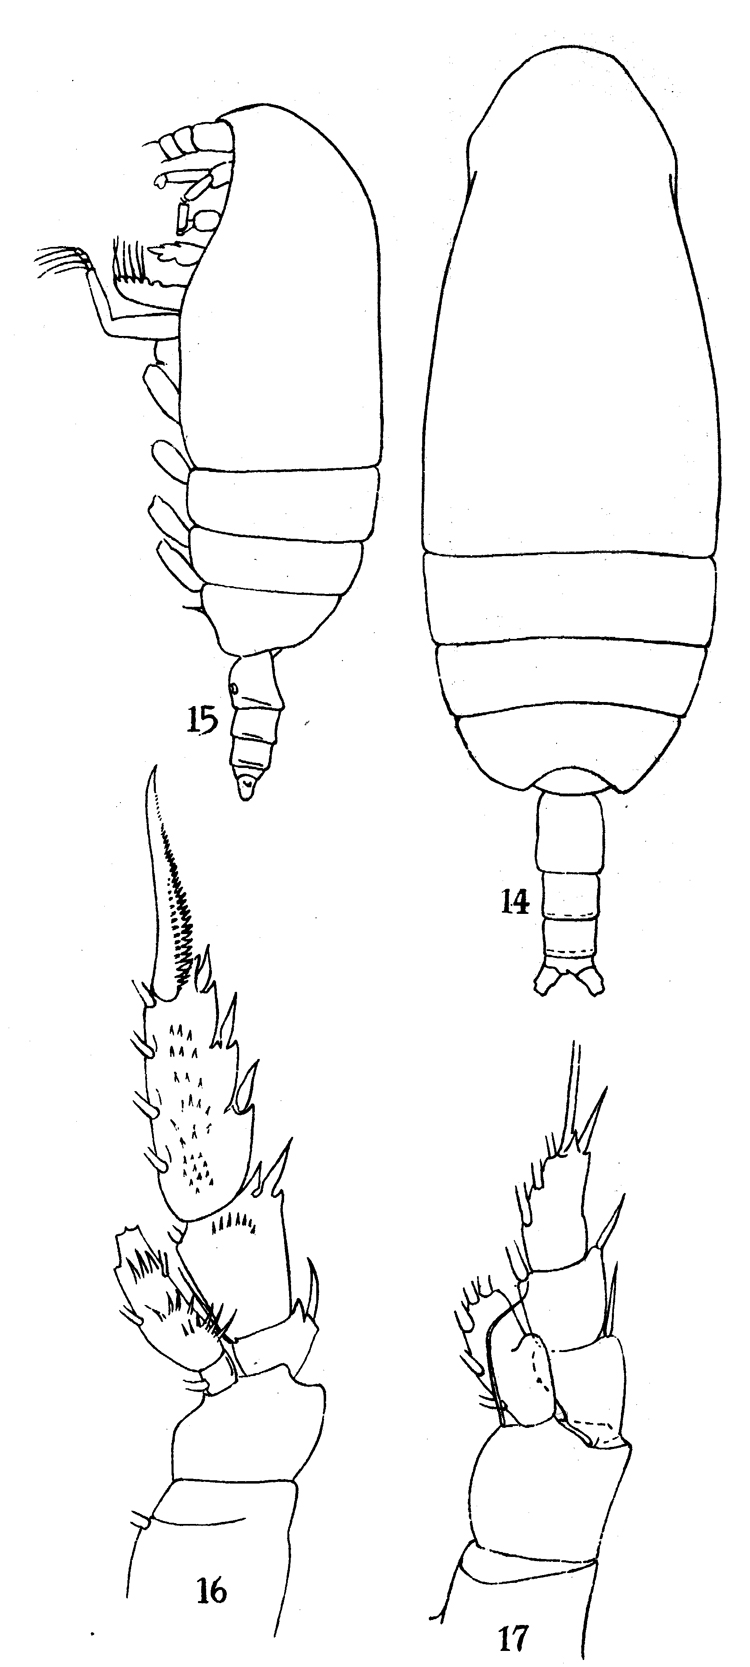 Species Amallothrix valida - Plate 8 of morphological figures